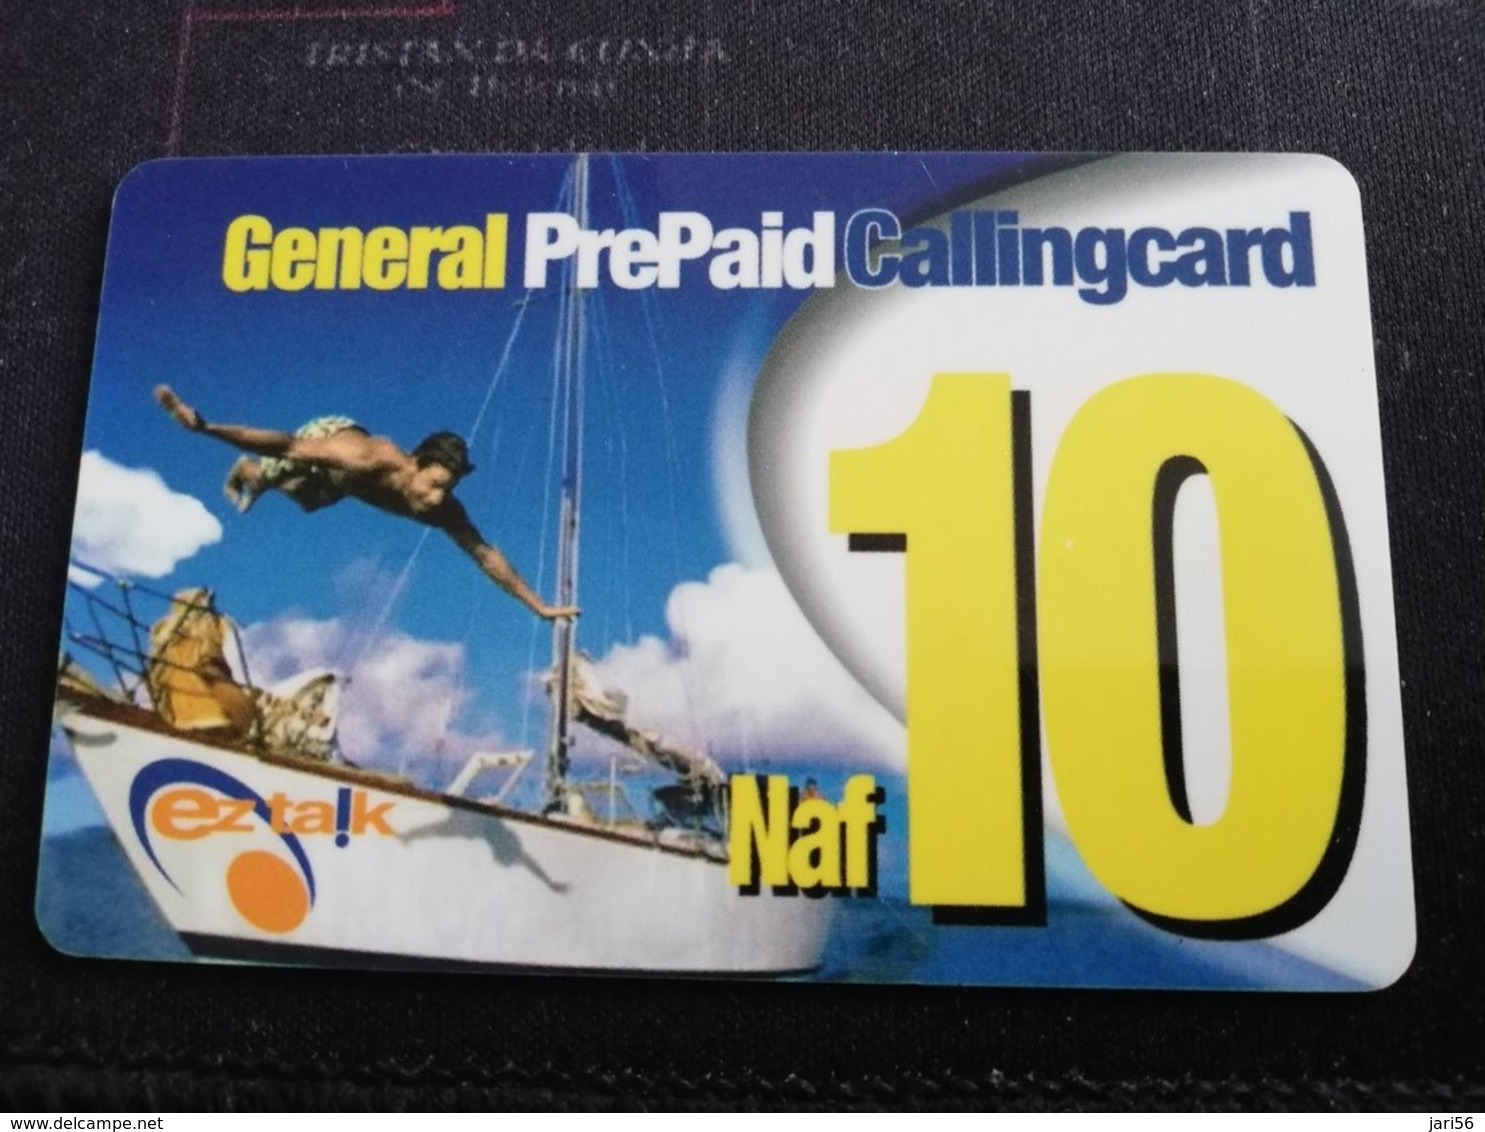 CURACAO NAF 10  GENERAL PREPAID CALLINGCARD, EZ TALK  THICK CARD     ** 957** - Antilles (Netherlands)